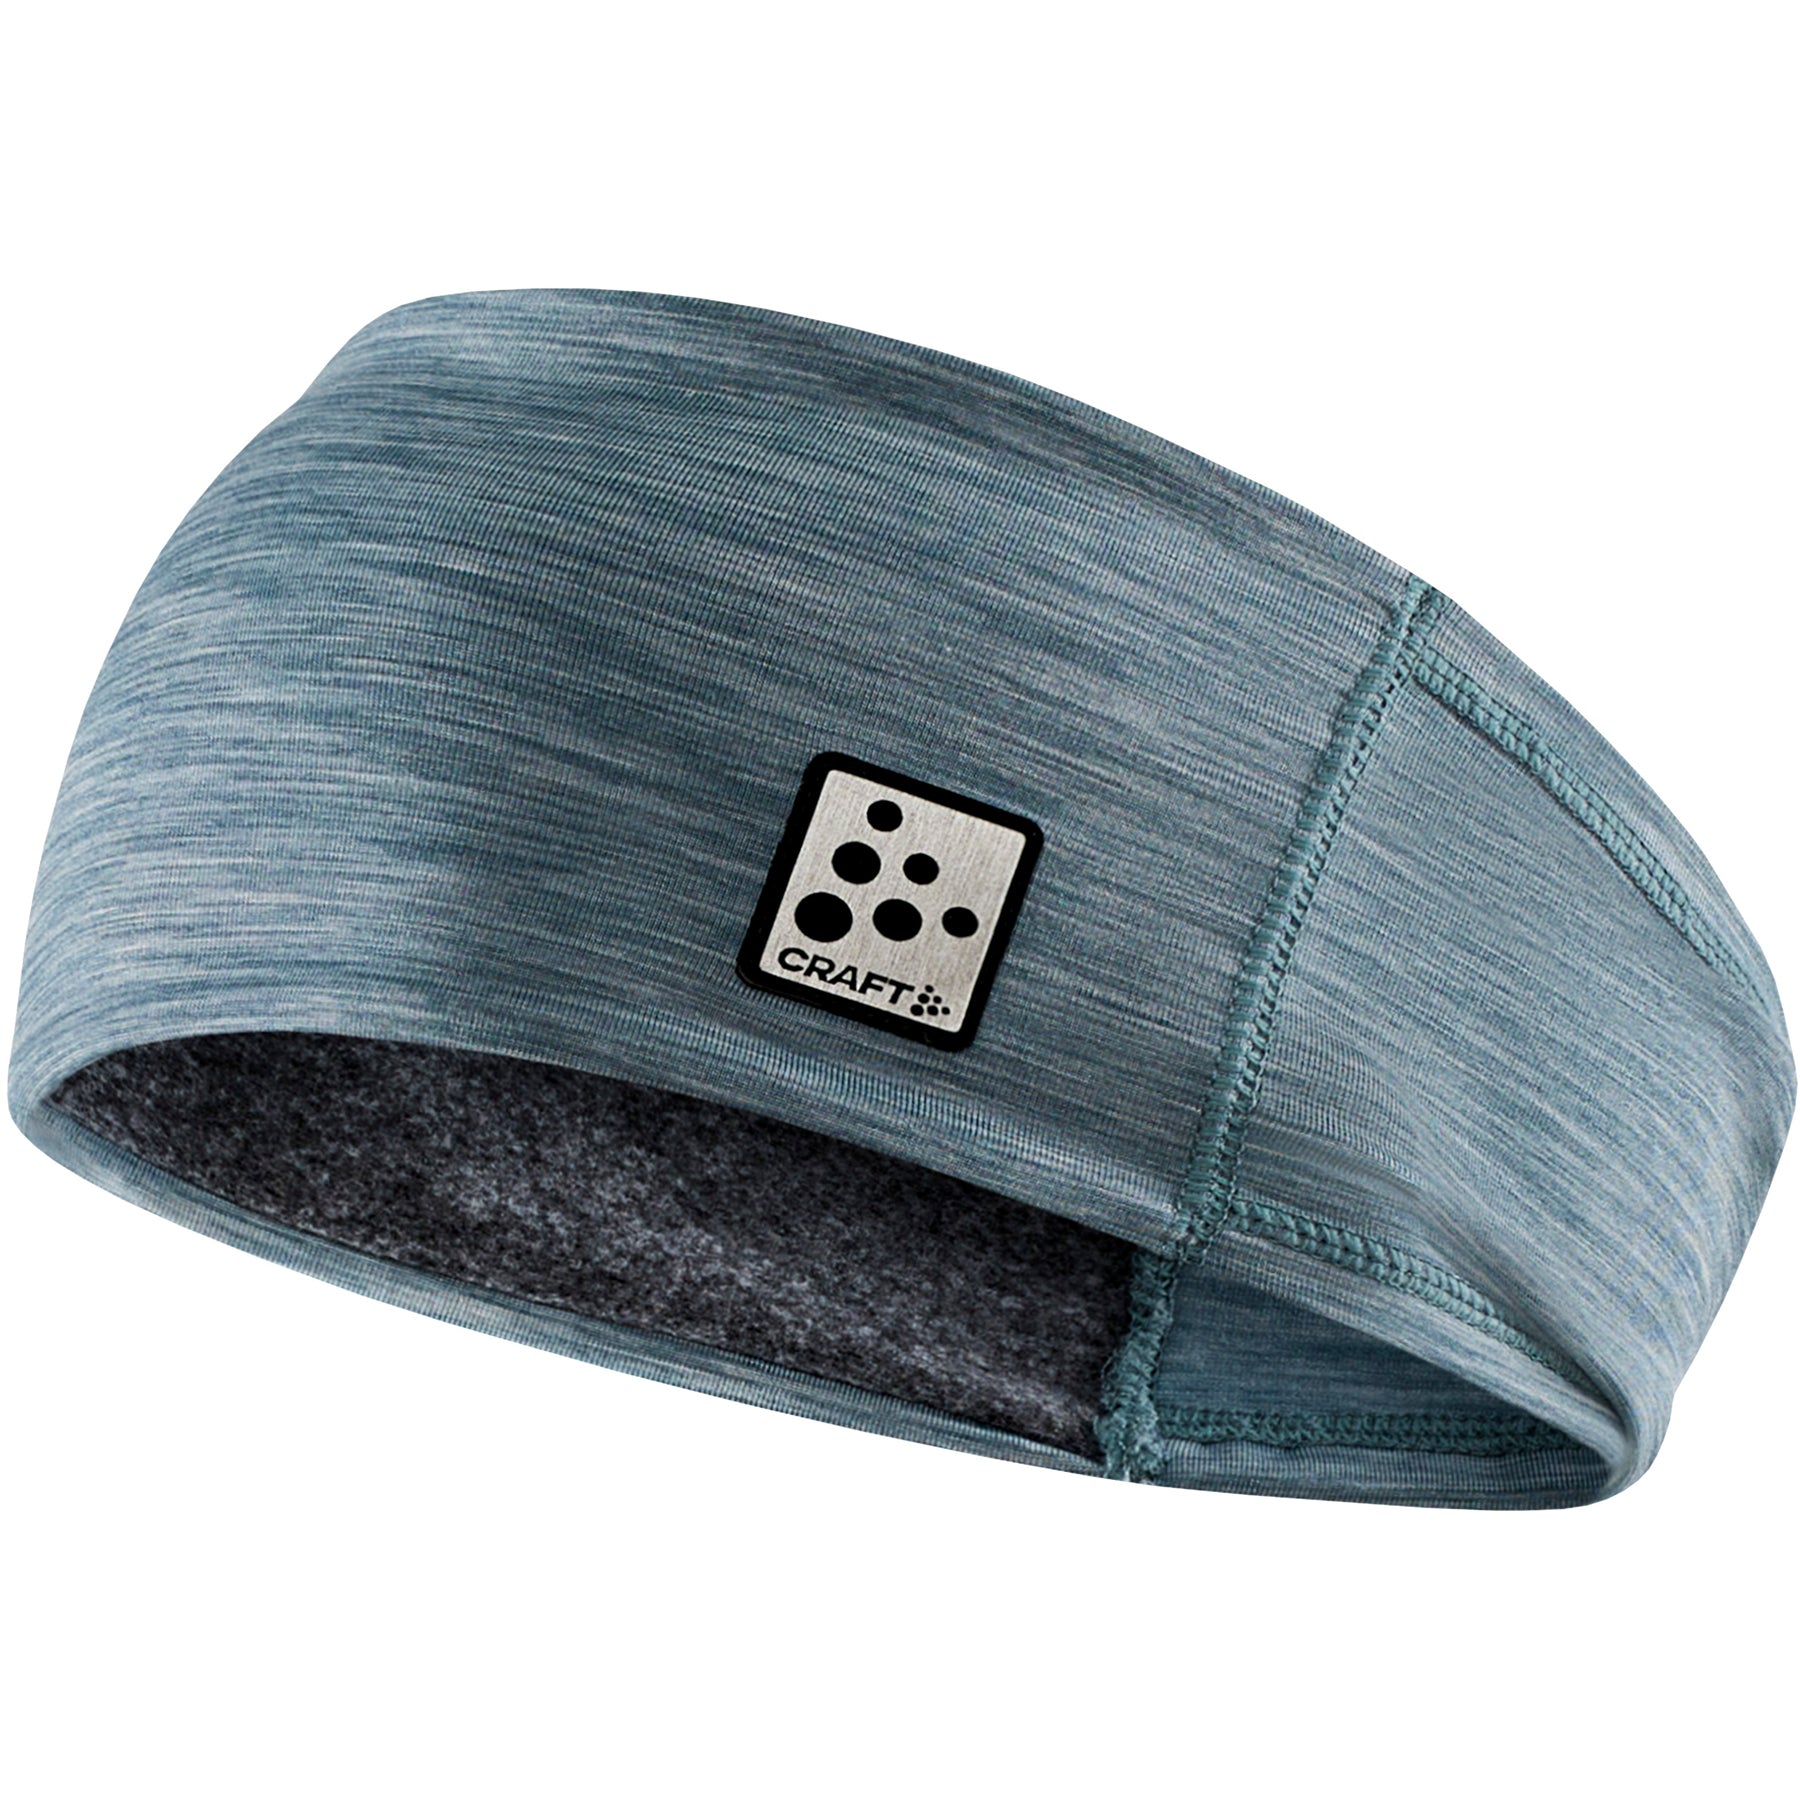 Buy trooper-melange Craft Microfleece Shaped Headband